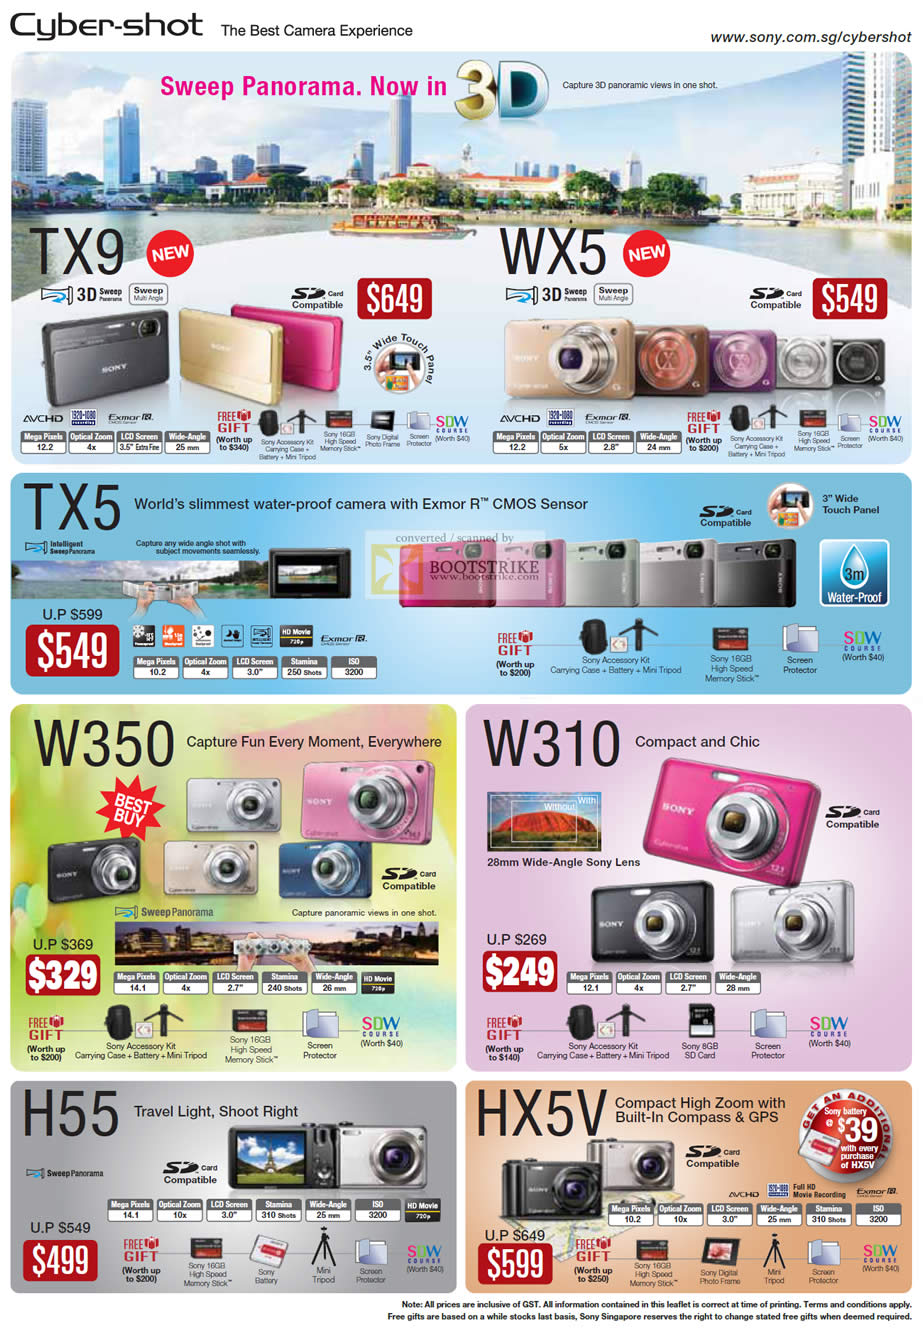 Comex 2010 price list image brochure of Sony Cybershot Digital Cameras TX9 WX5 TX5 W350 W310 H55 HX5V